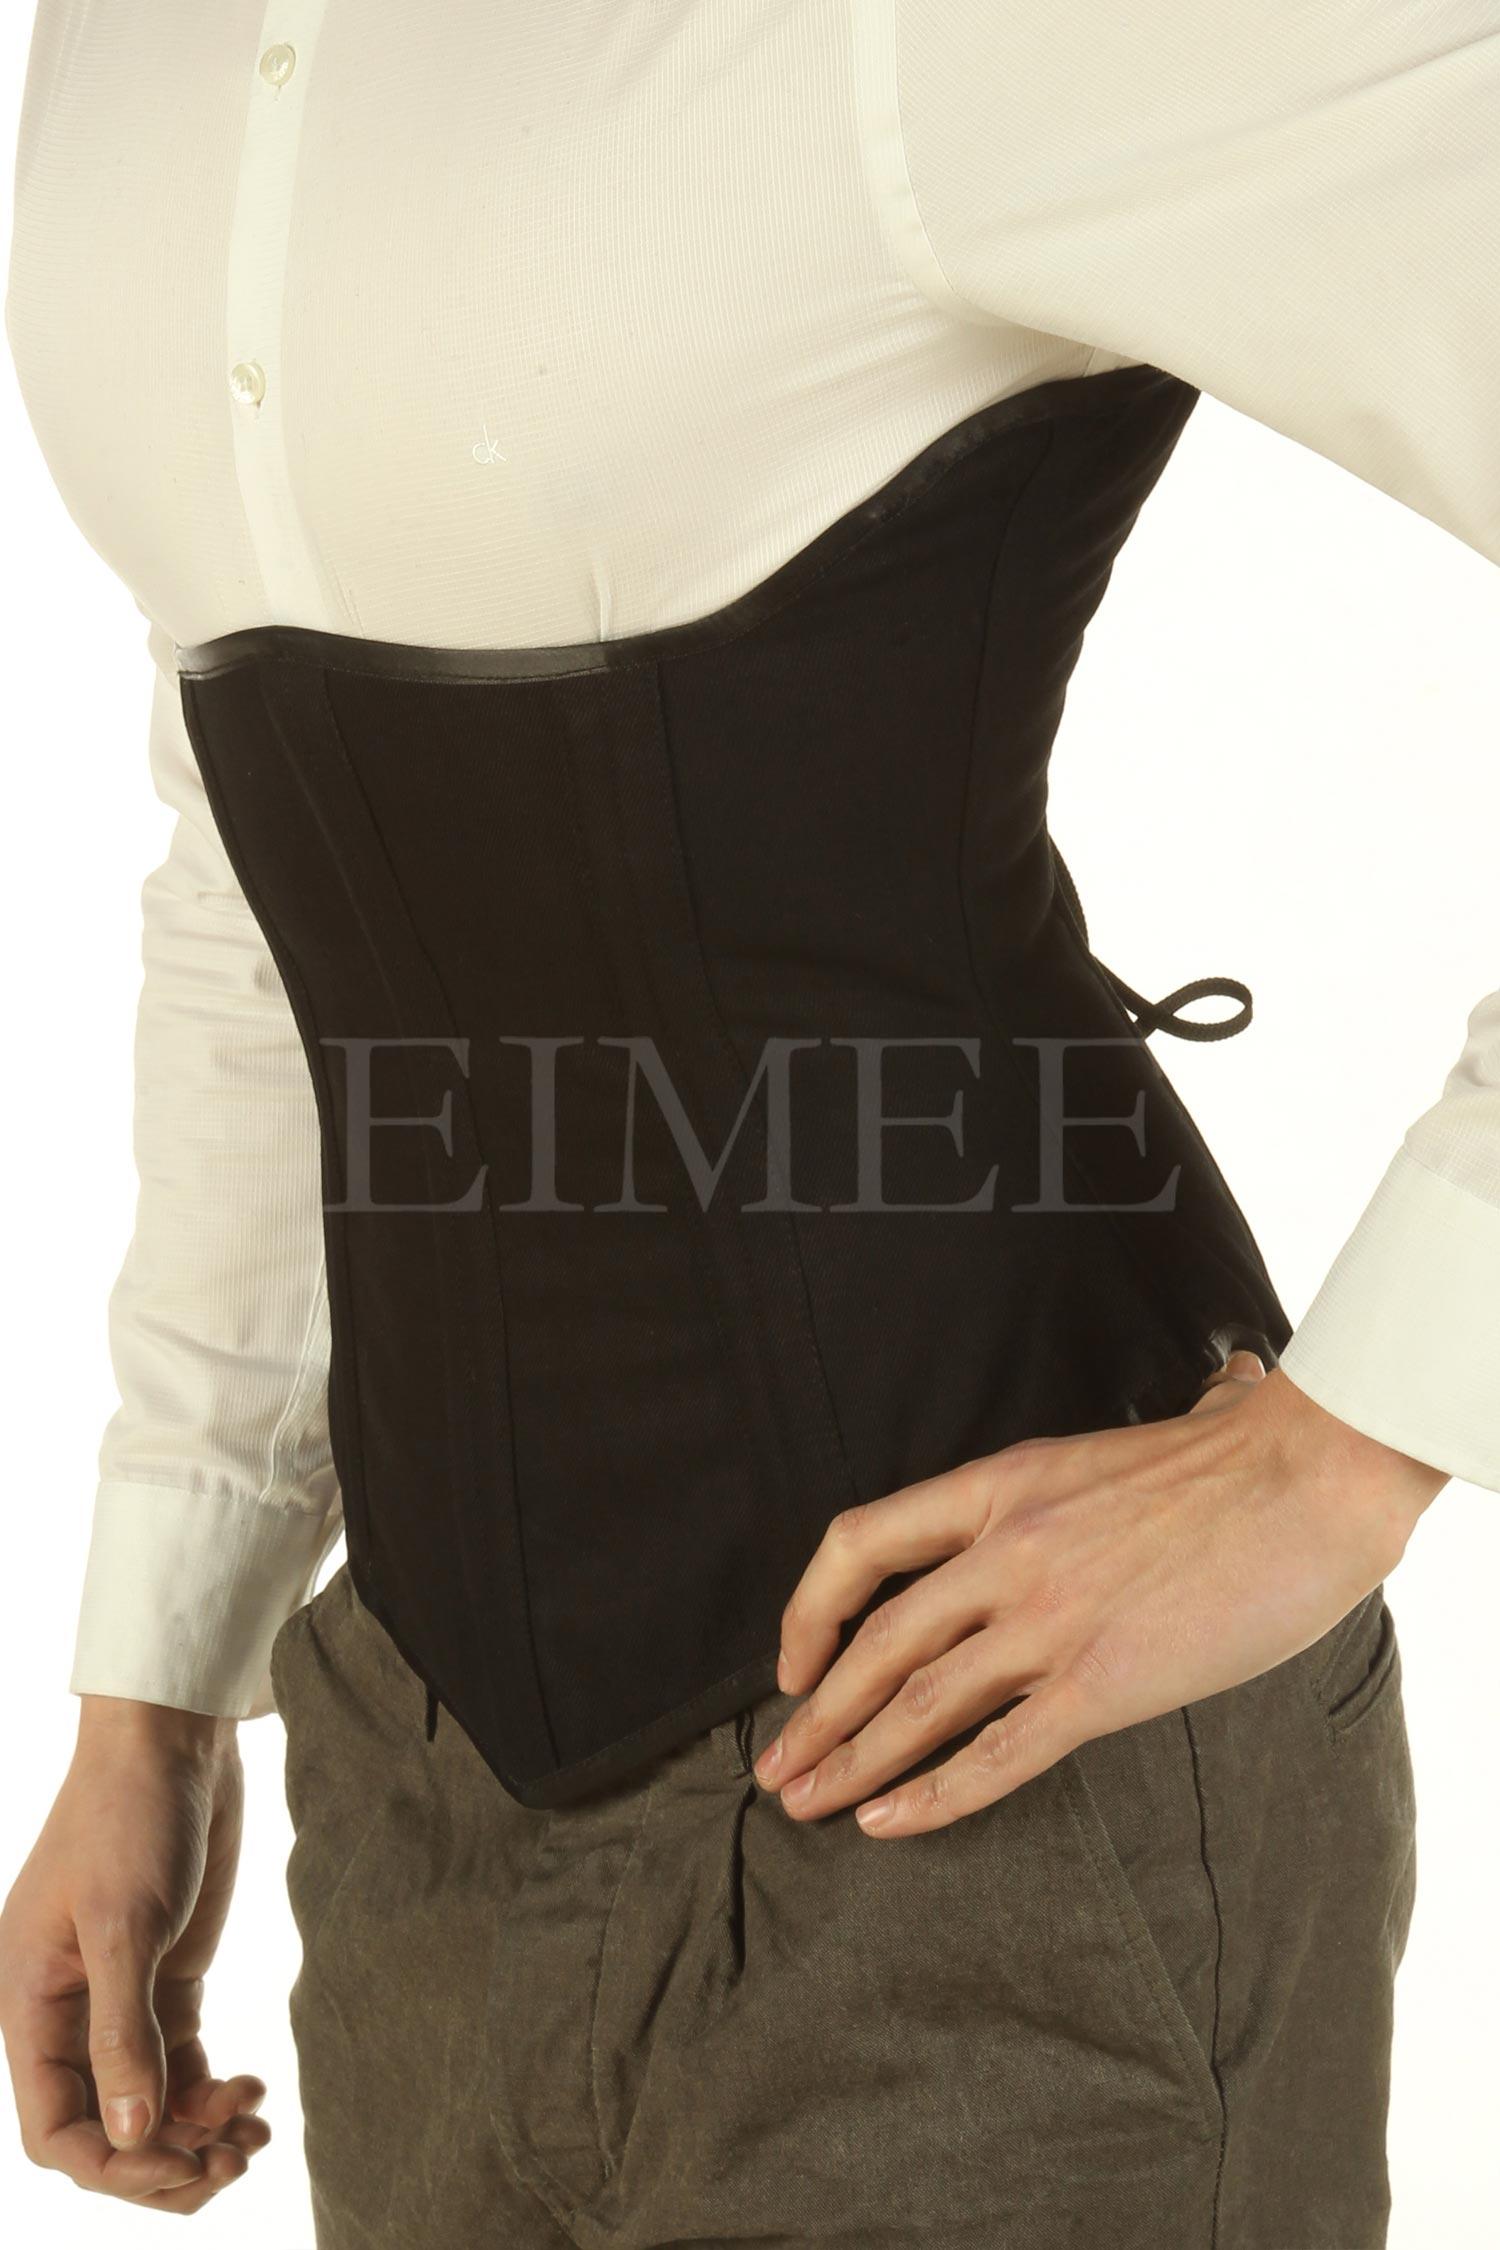 https://cdn11.bigcommerce.com/s-r4cb6m4/images/stencil/original/products/721/2173/cott-1224-mens-corset-front__75146.1699797922.jpg?c=2